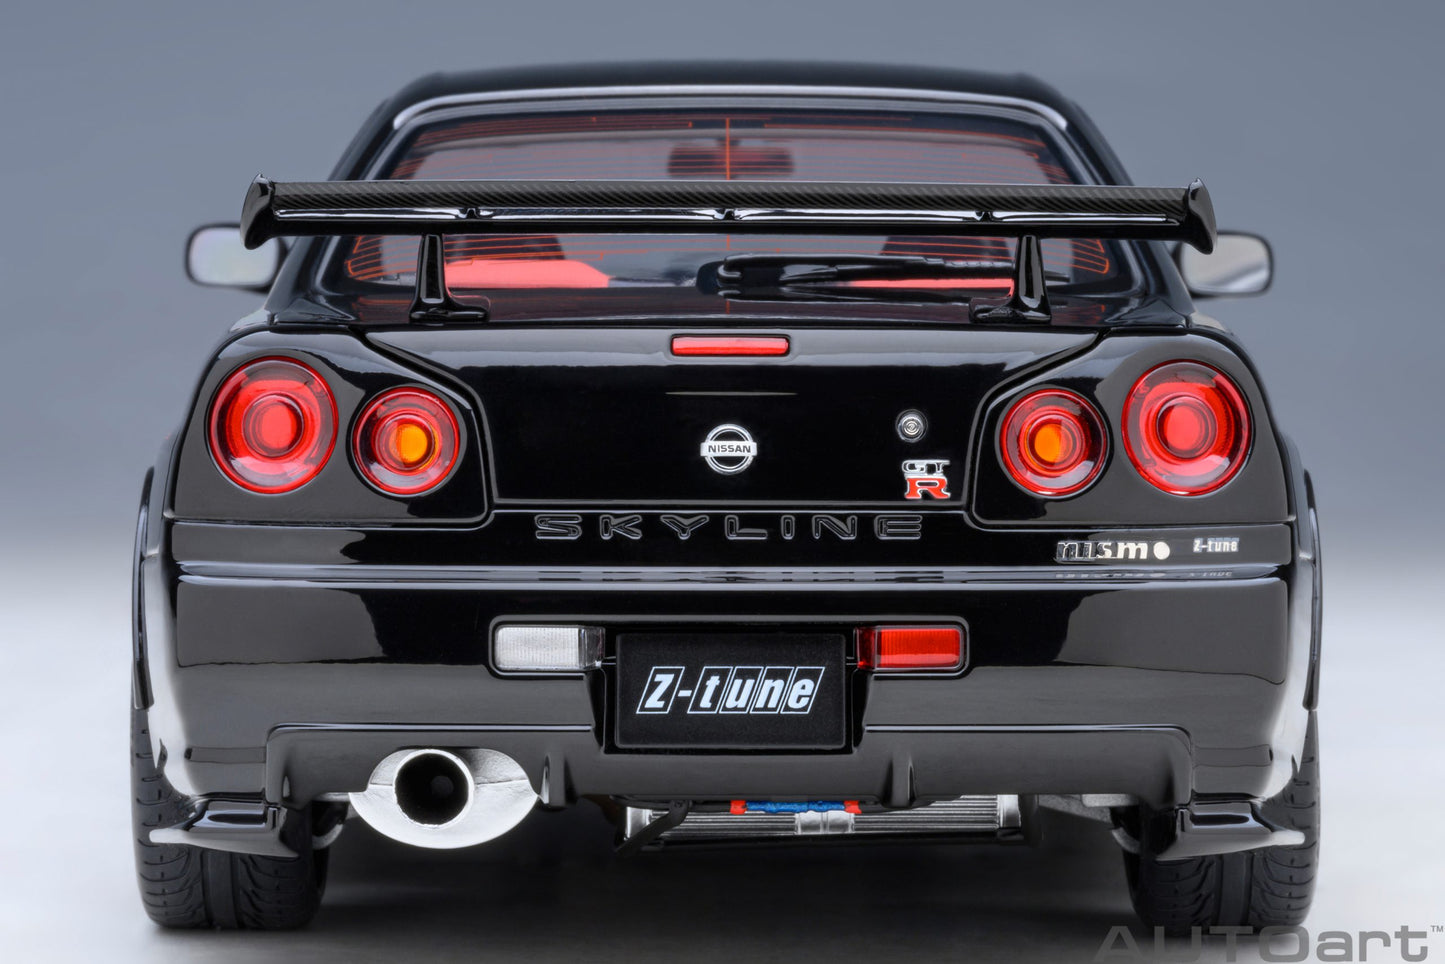 AUTOart 1:18 Nissan Skyline GT-R (R34) Z-tune (Black Pearl) 77463